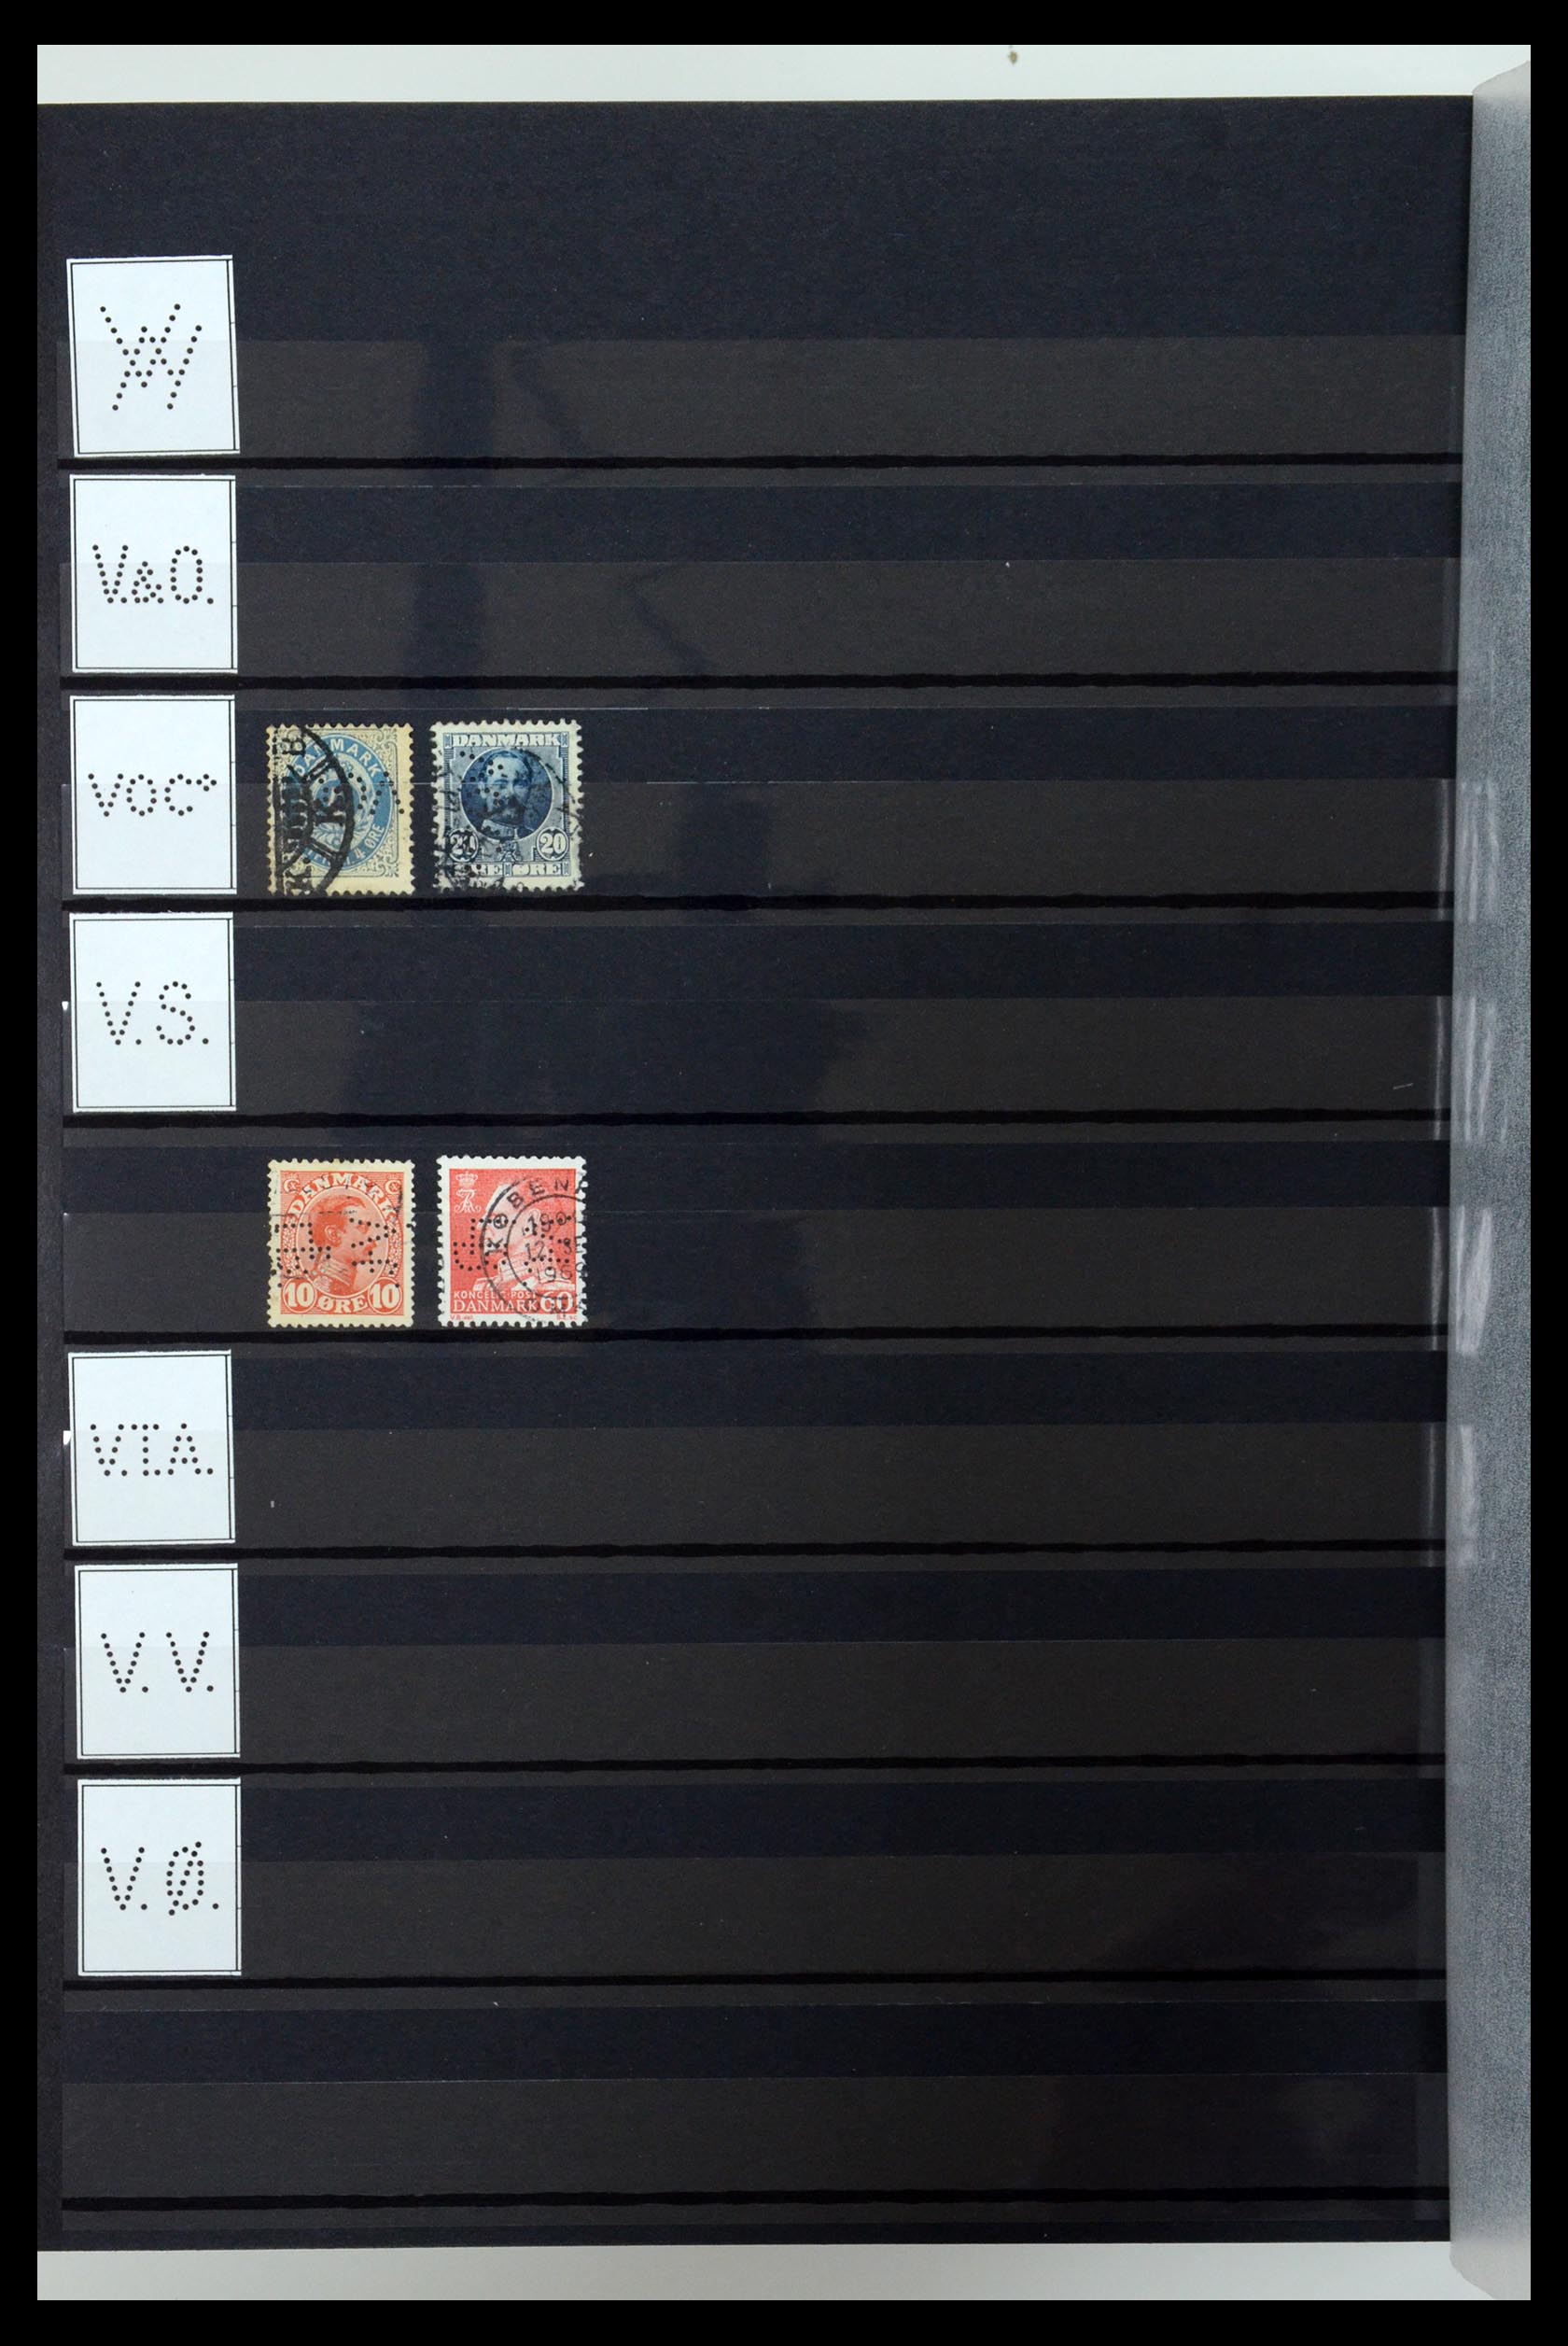 36396 222 - Stamp collection 36396 Denmark perfins.